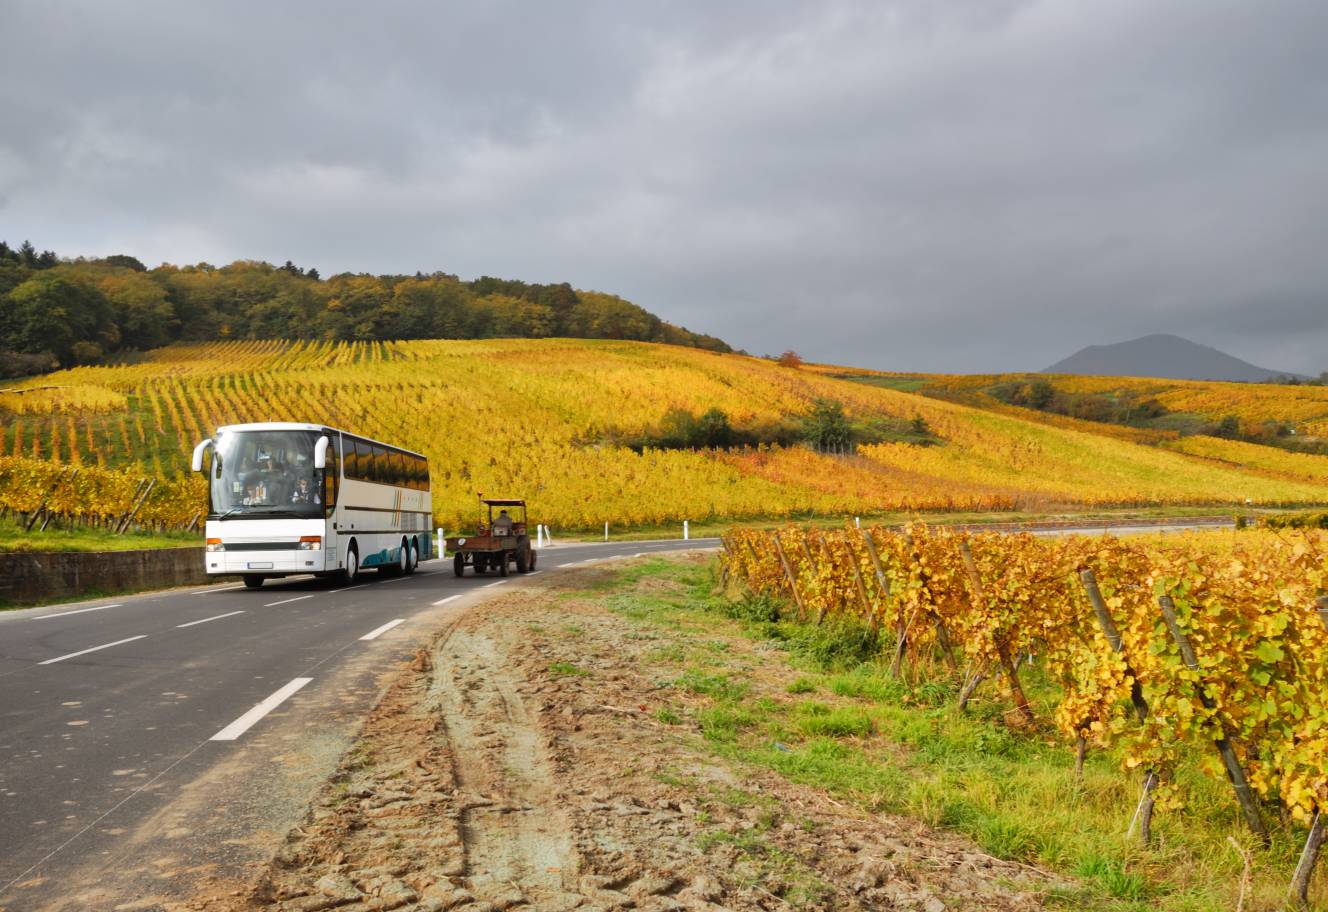 Shuttle bus: Easy access to Europapark - Hotel La Toscana